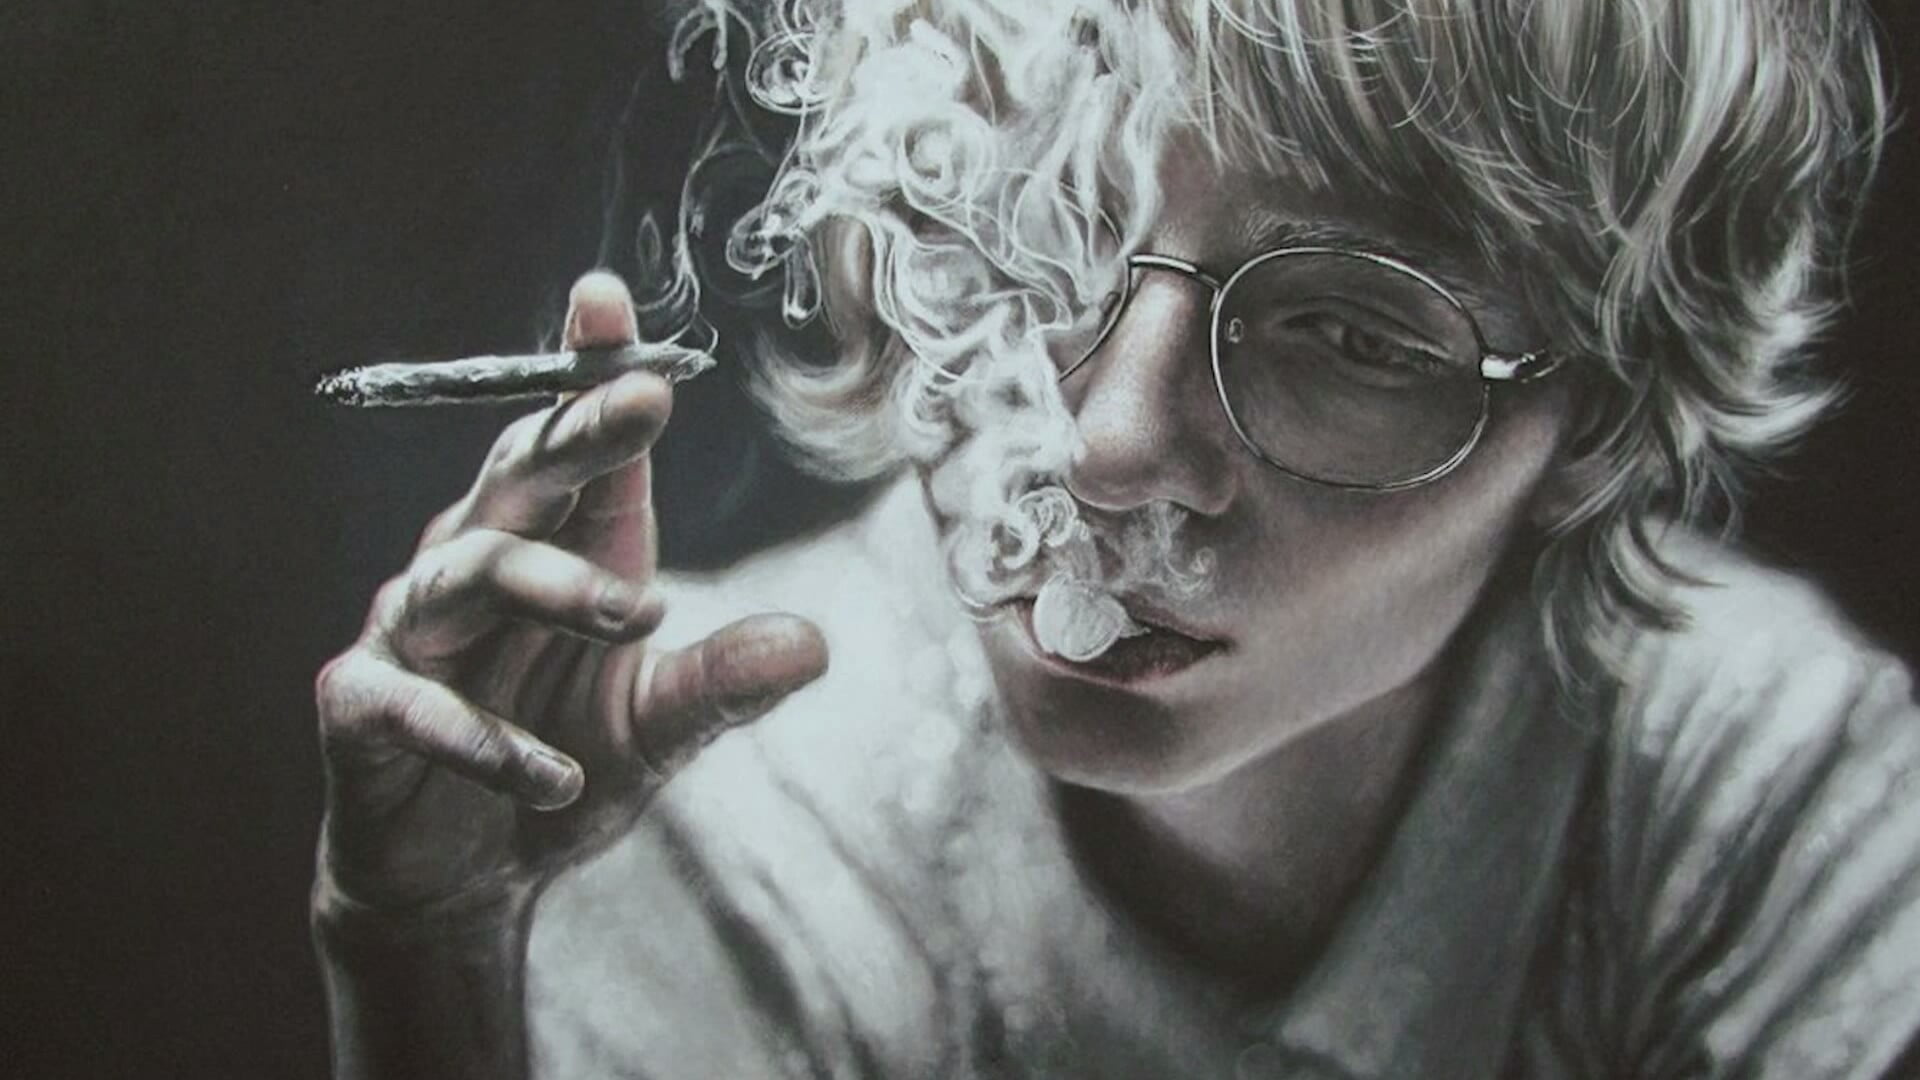 drawing, illustration, smoke, smoking, hand, aesthetic, realistic